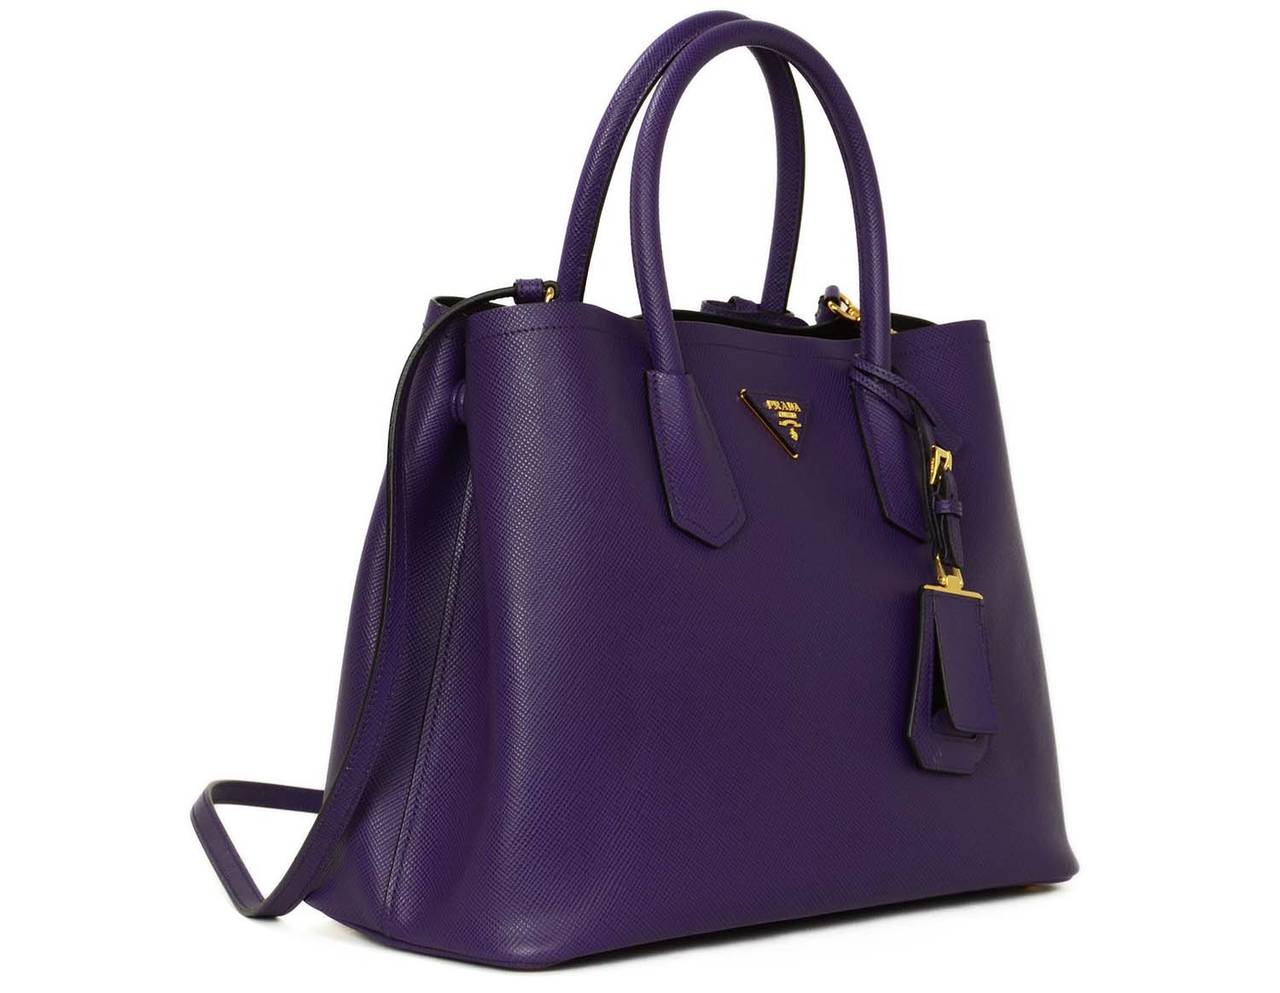 PRADA Viola Purple Saffiano Leather Tote Bag w/ Strap BN2775 rt. $2,650 at 1stdibs